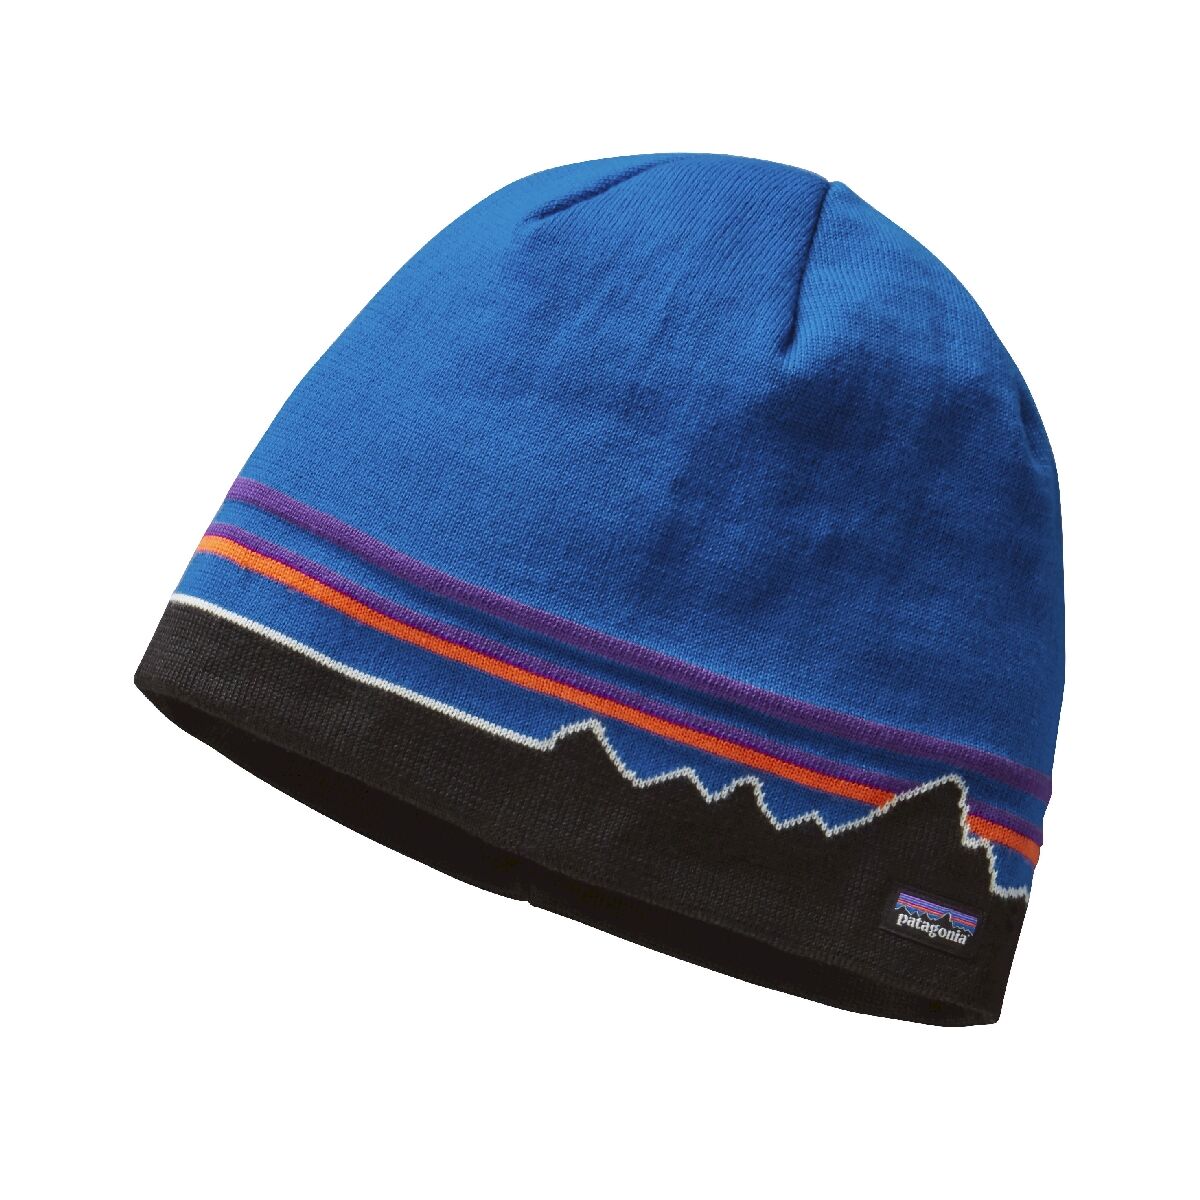 Patagonia Beanie Hat - Pipo